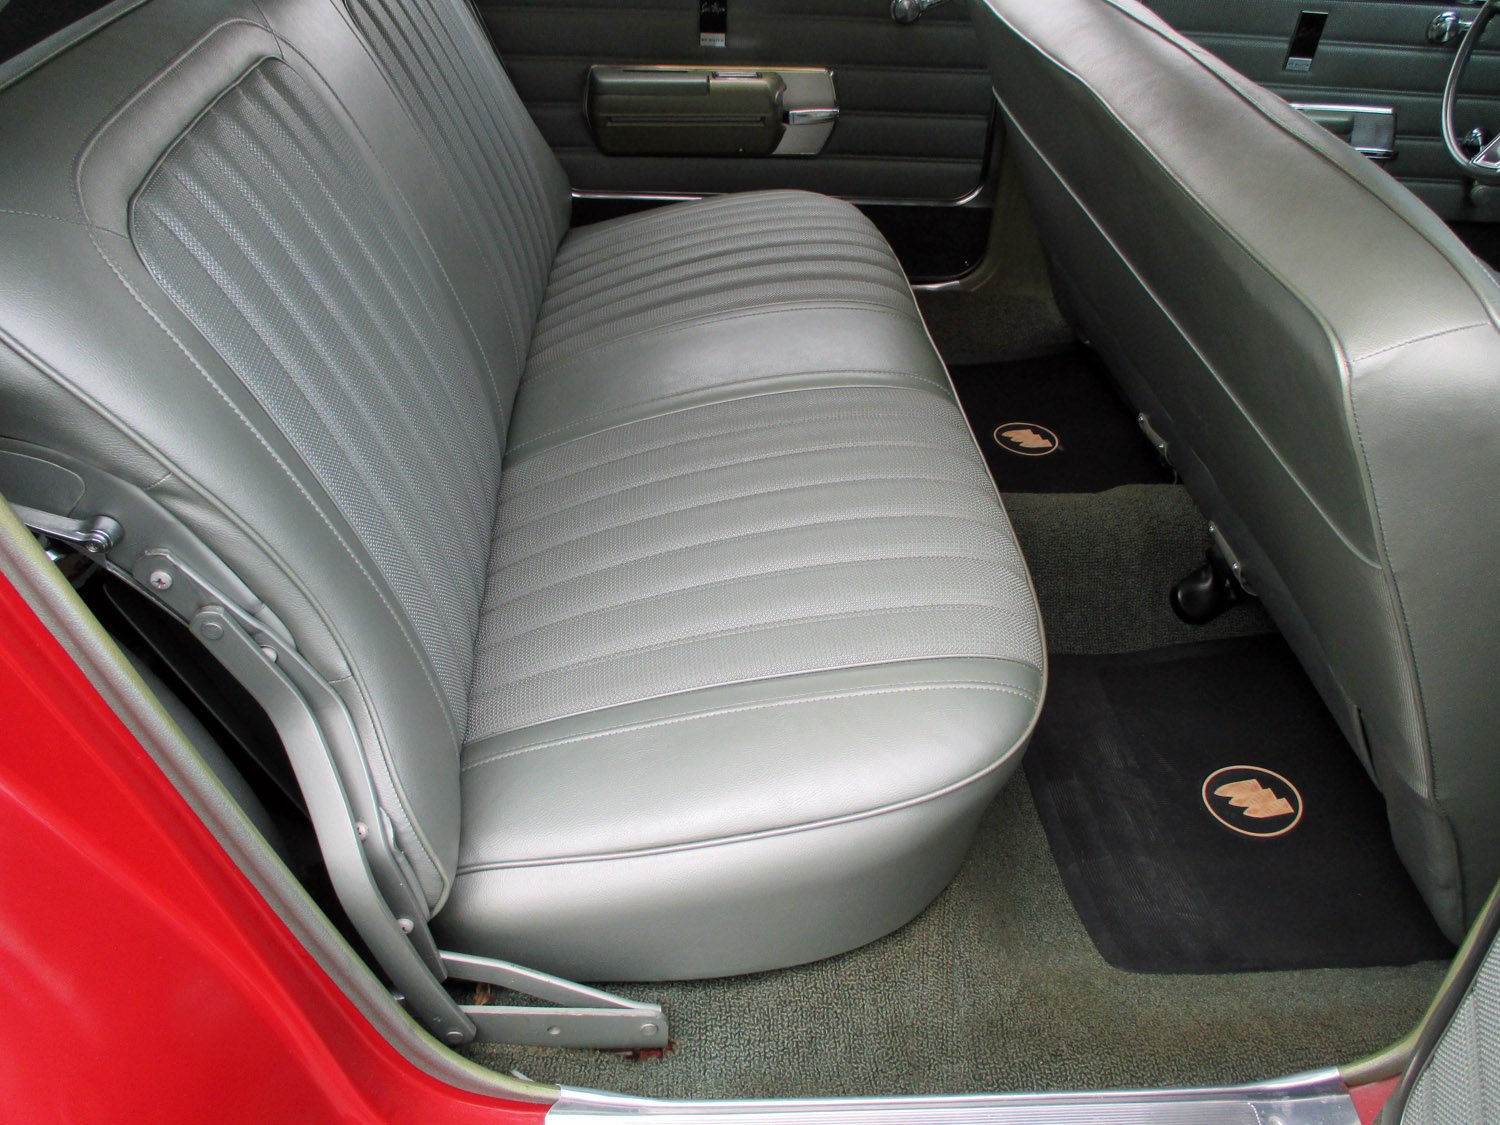 1968 Buick Sport Wagon